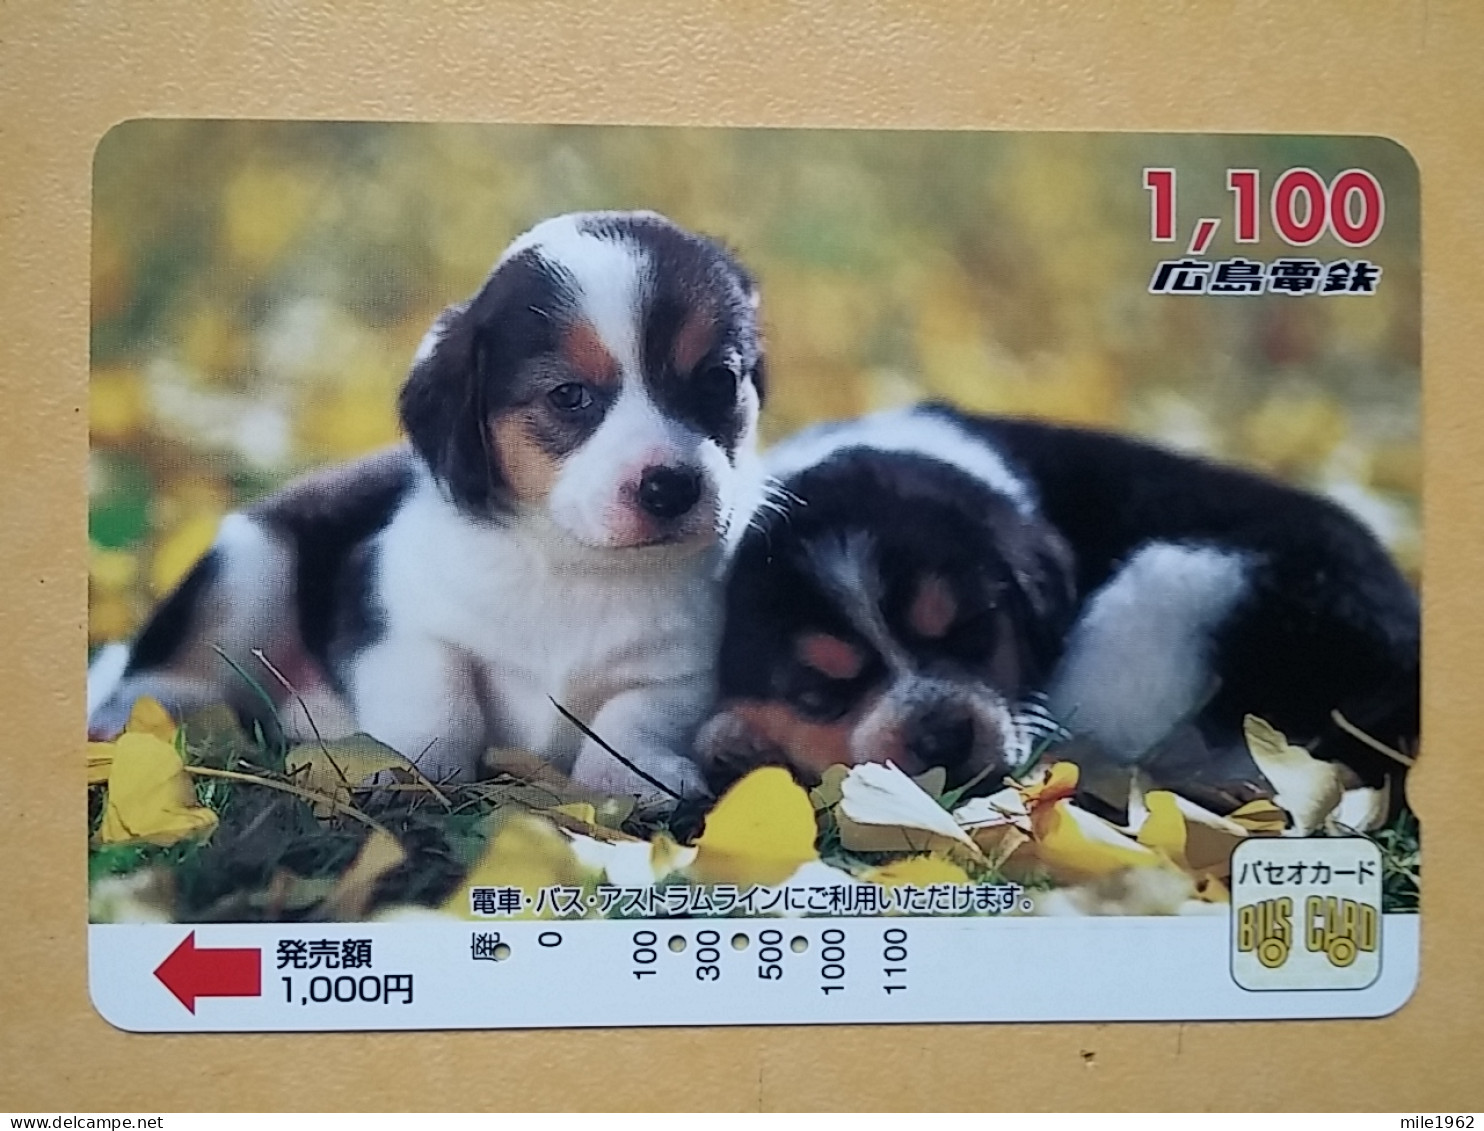 T-400 - JAPAN, Japon, Nipon, Carte Prepayee, Prepaid Card, Dog, Chien,  - Hunde